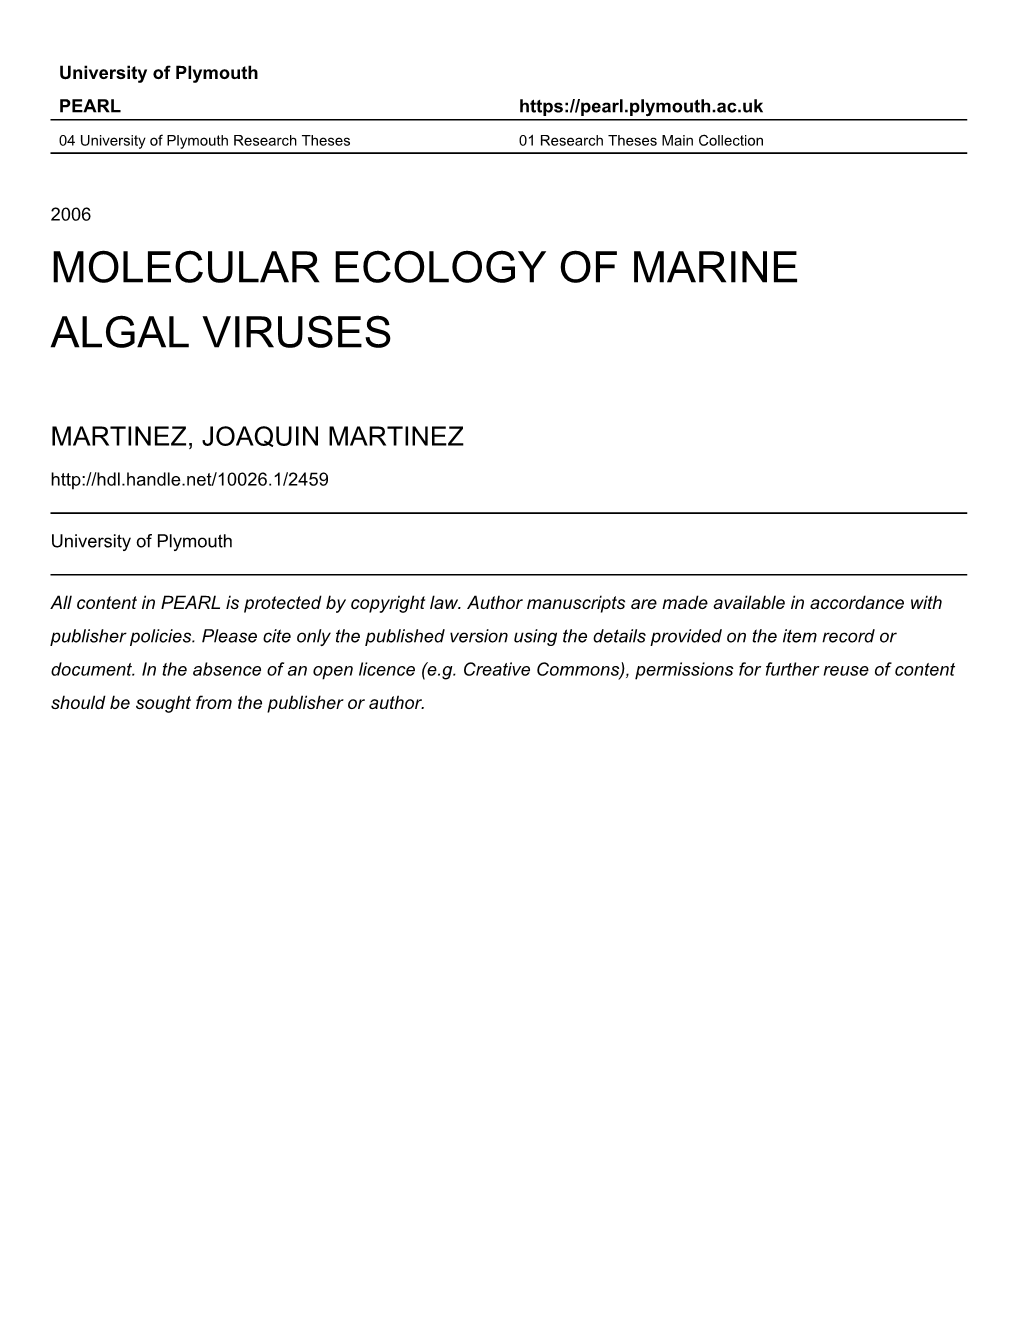 MOLECULAR ECOLOGY of MARINE ALGAL VIRUSES by JOAQUIN